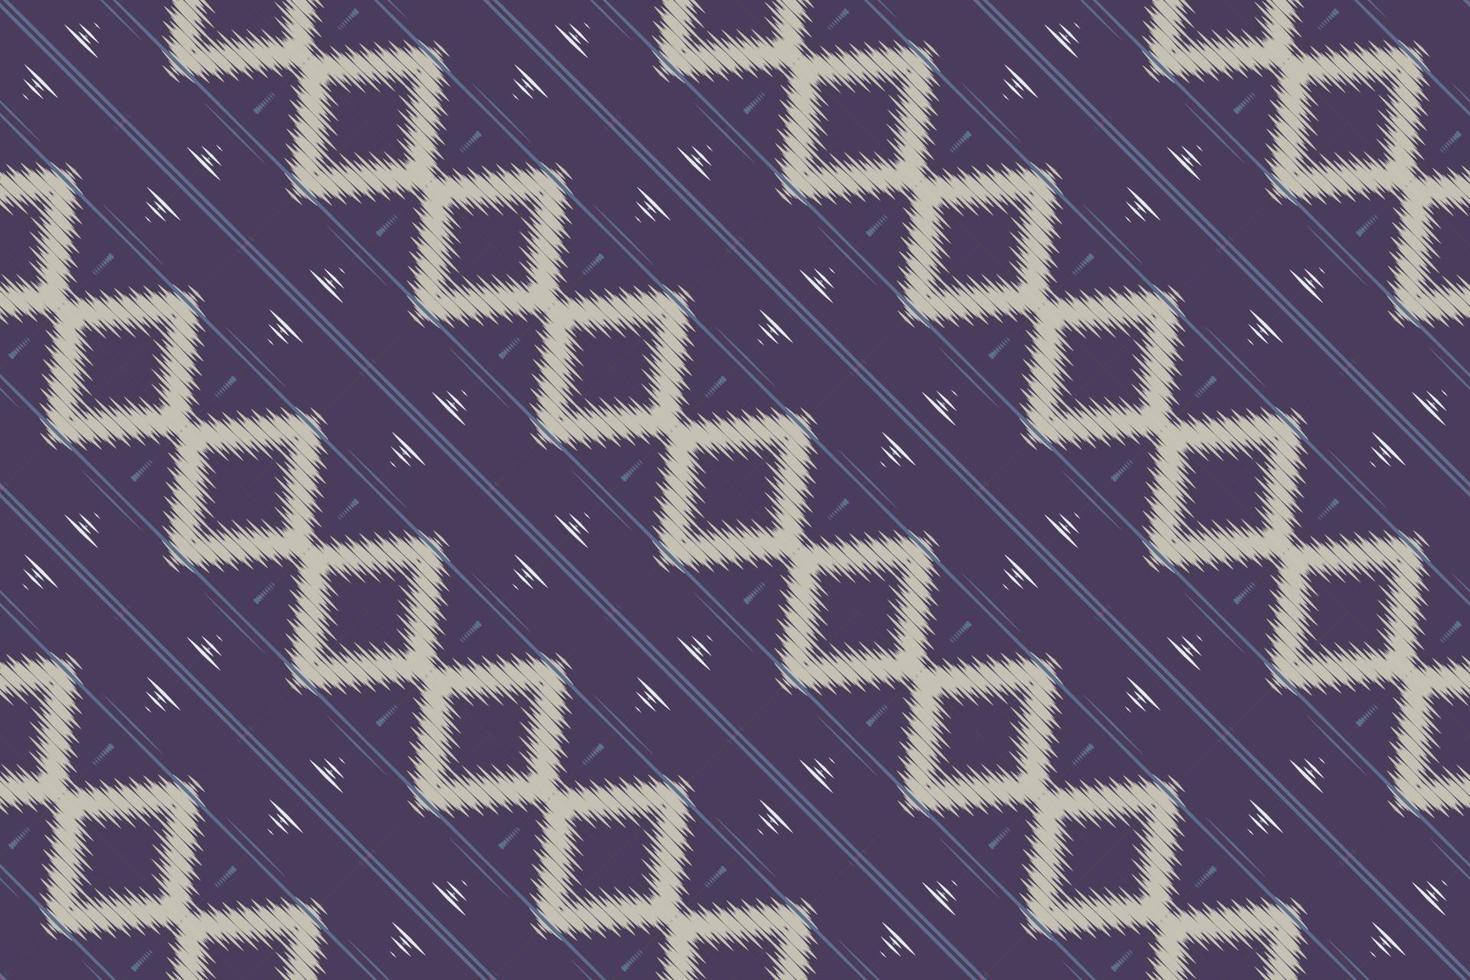 motivo textil batik ikat imprime patrón sin costuras diseño de vector digital para imprimir saree kurti borneo borde de tela símbolos de pincel muestras diseñador